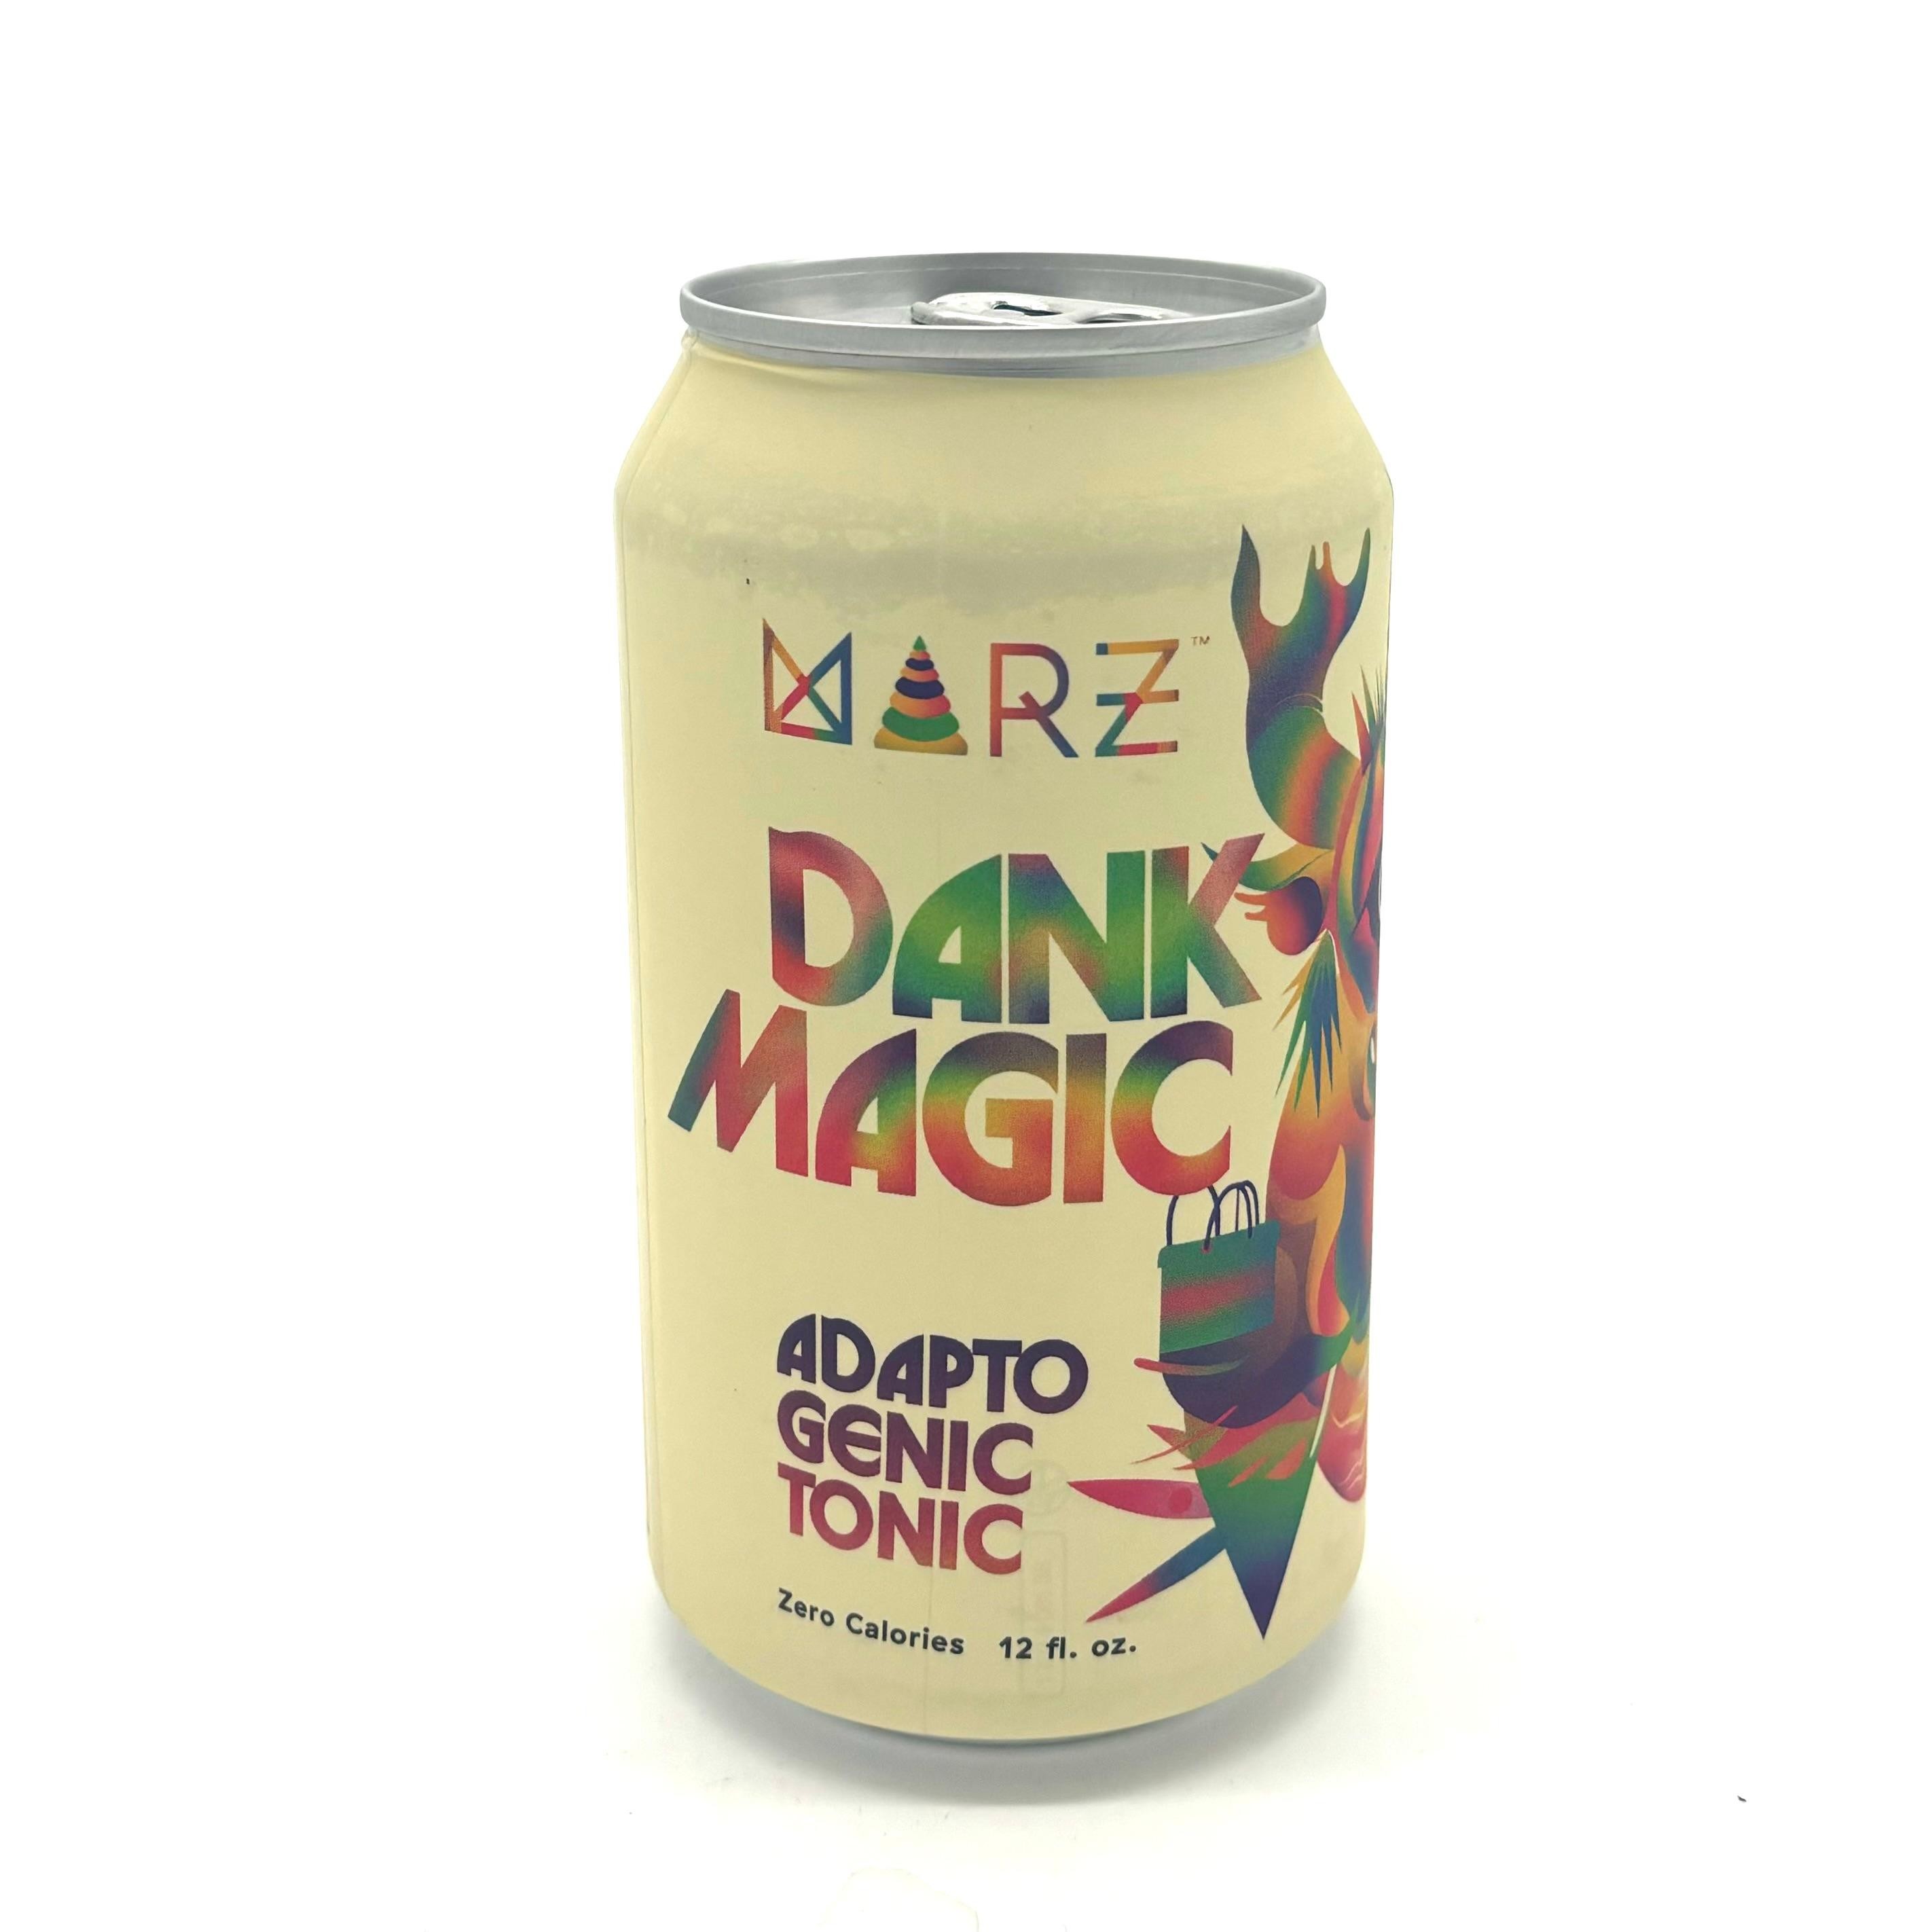 Marz - Dank Magic (Non-Alcoholic Adaptogenic Tonic)